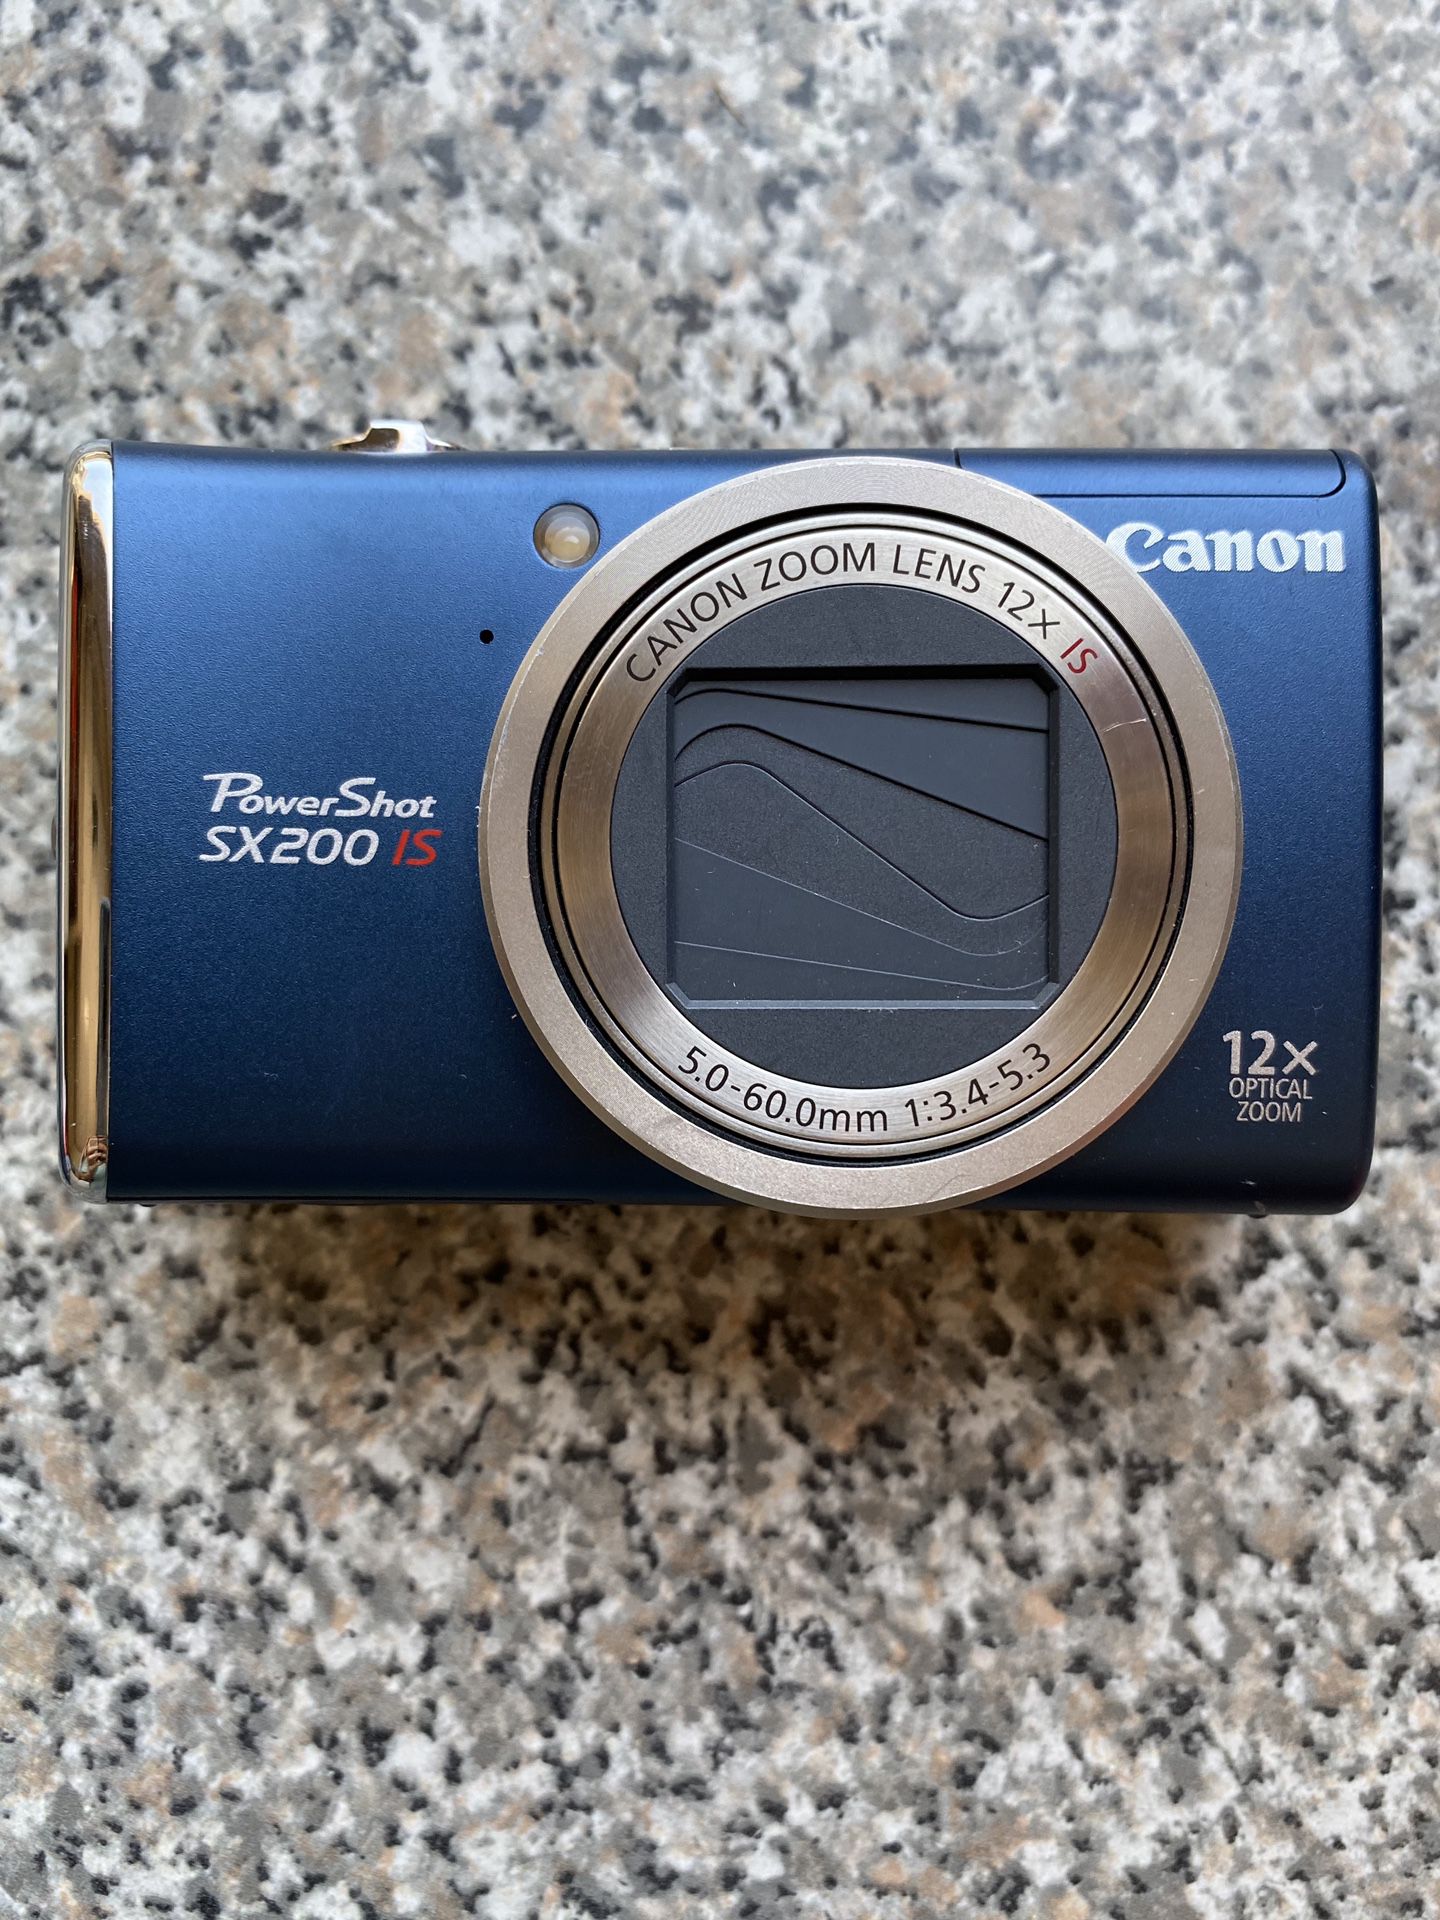 Canon PowerShot SX200IS 12 MP digital camera (navy)